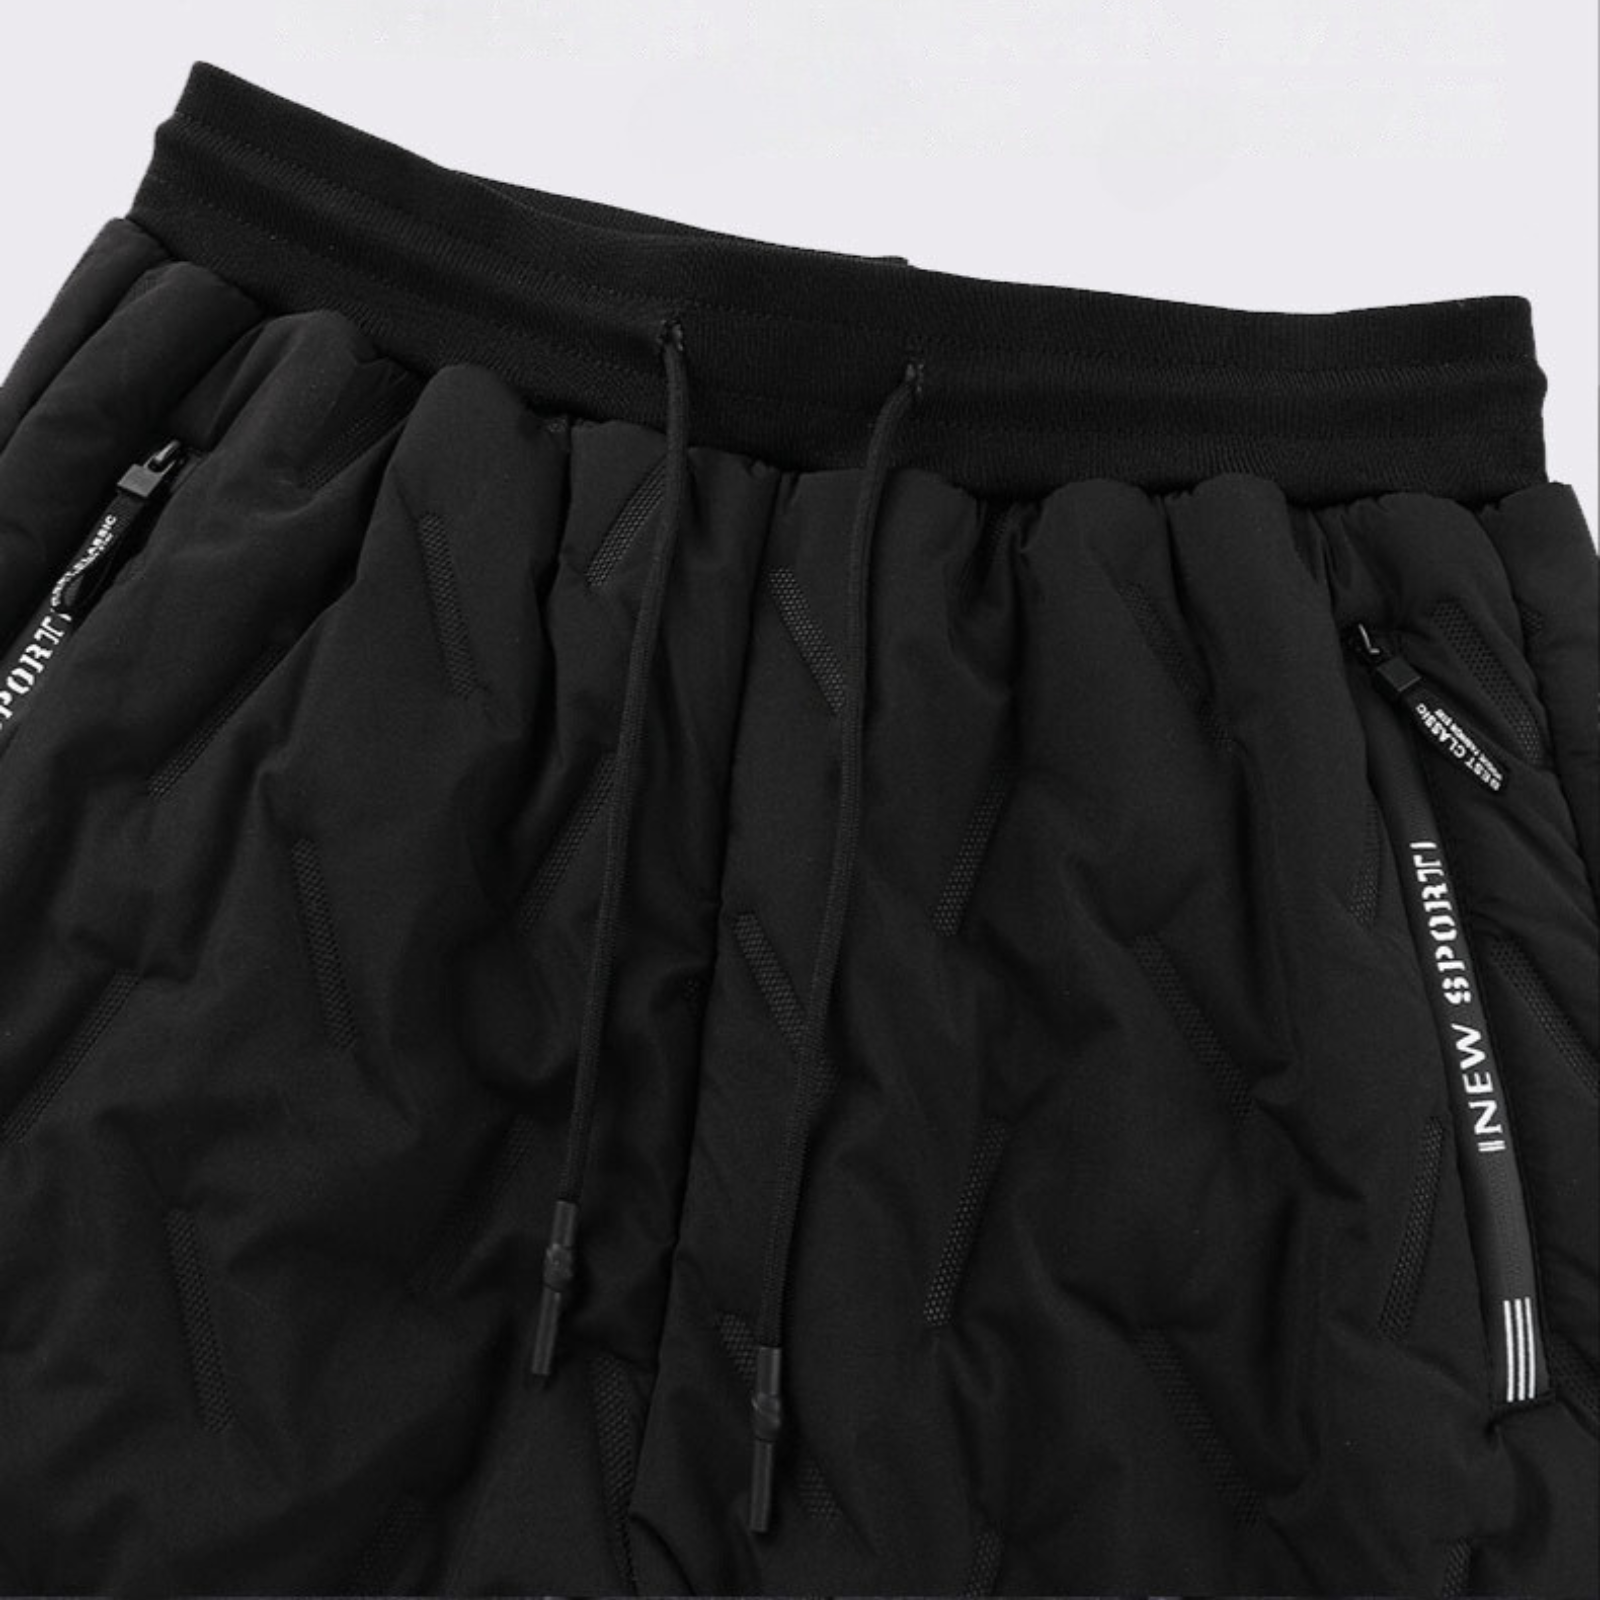 Unisex Weatherproof Fleece Lined Pants/Trousers